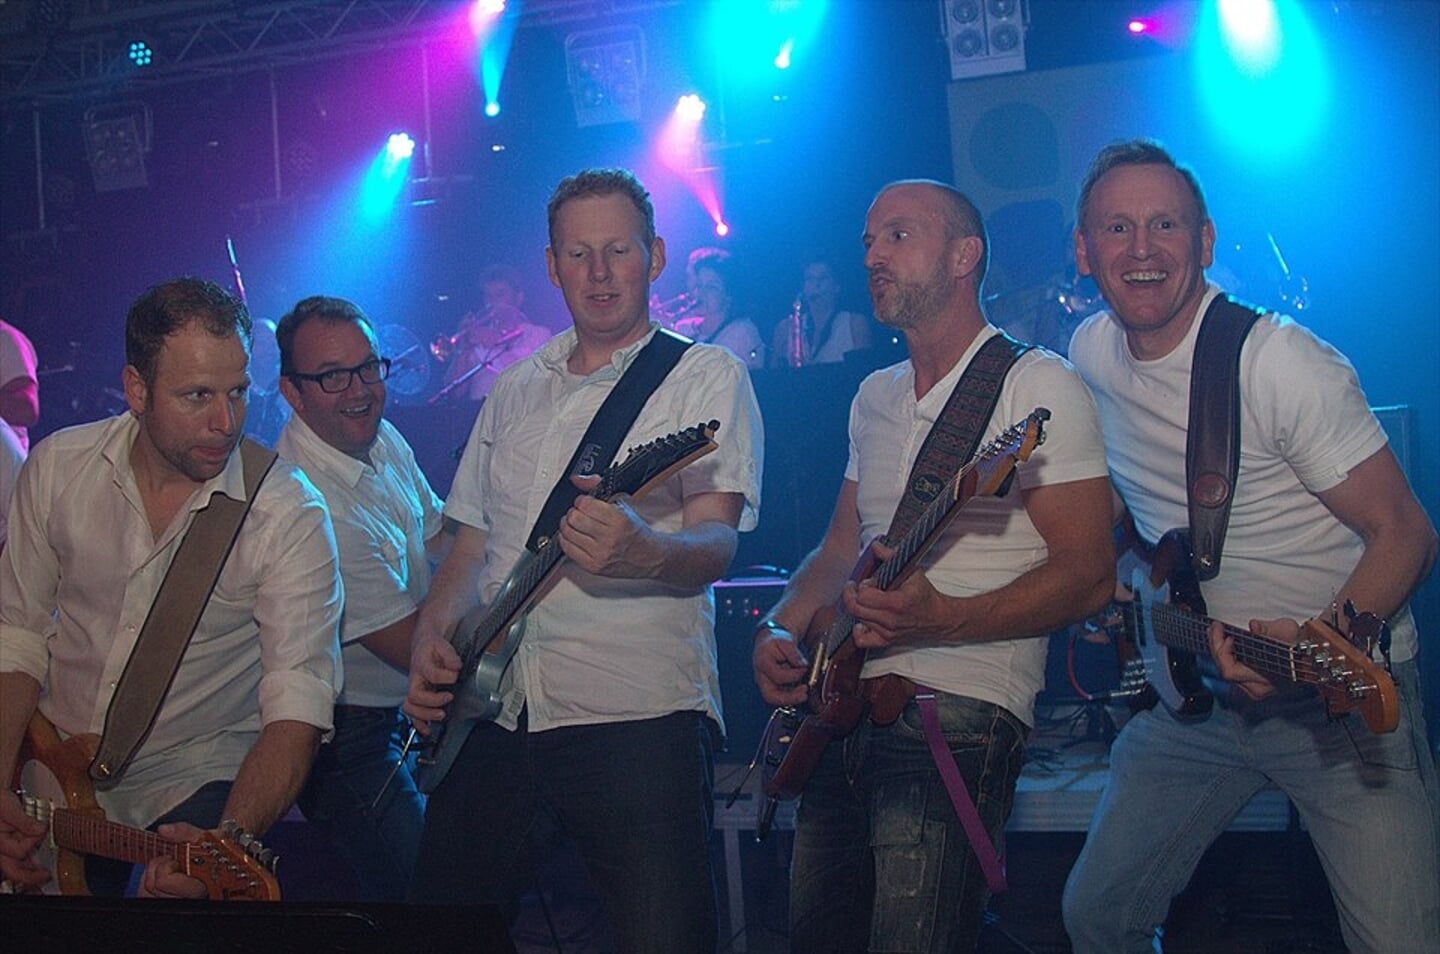 Reurle-Live editie 2014 met op de voorgrand de gitaristen (v.l.n.r.) Rik Kamperman, Wim Weernink, Martin Drenth en Rob Hulshof. Foto: PR